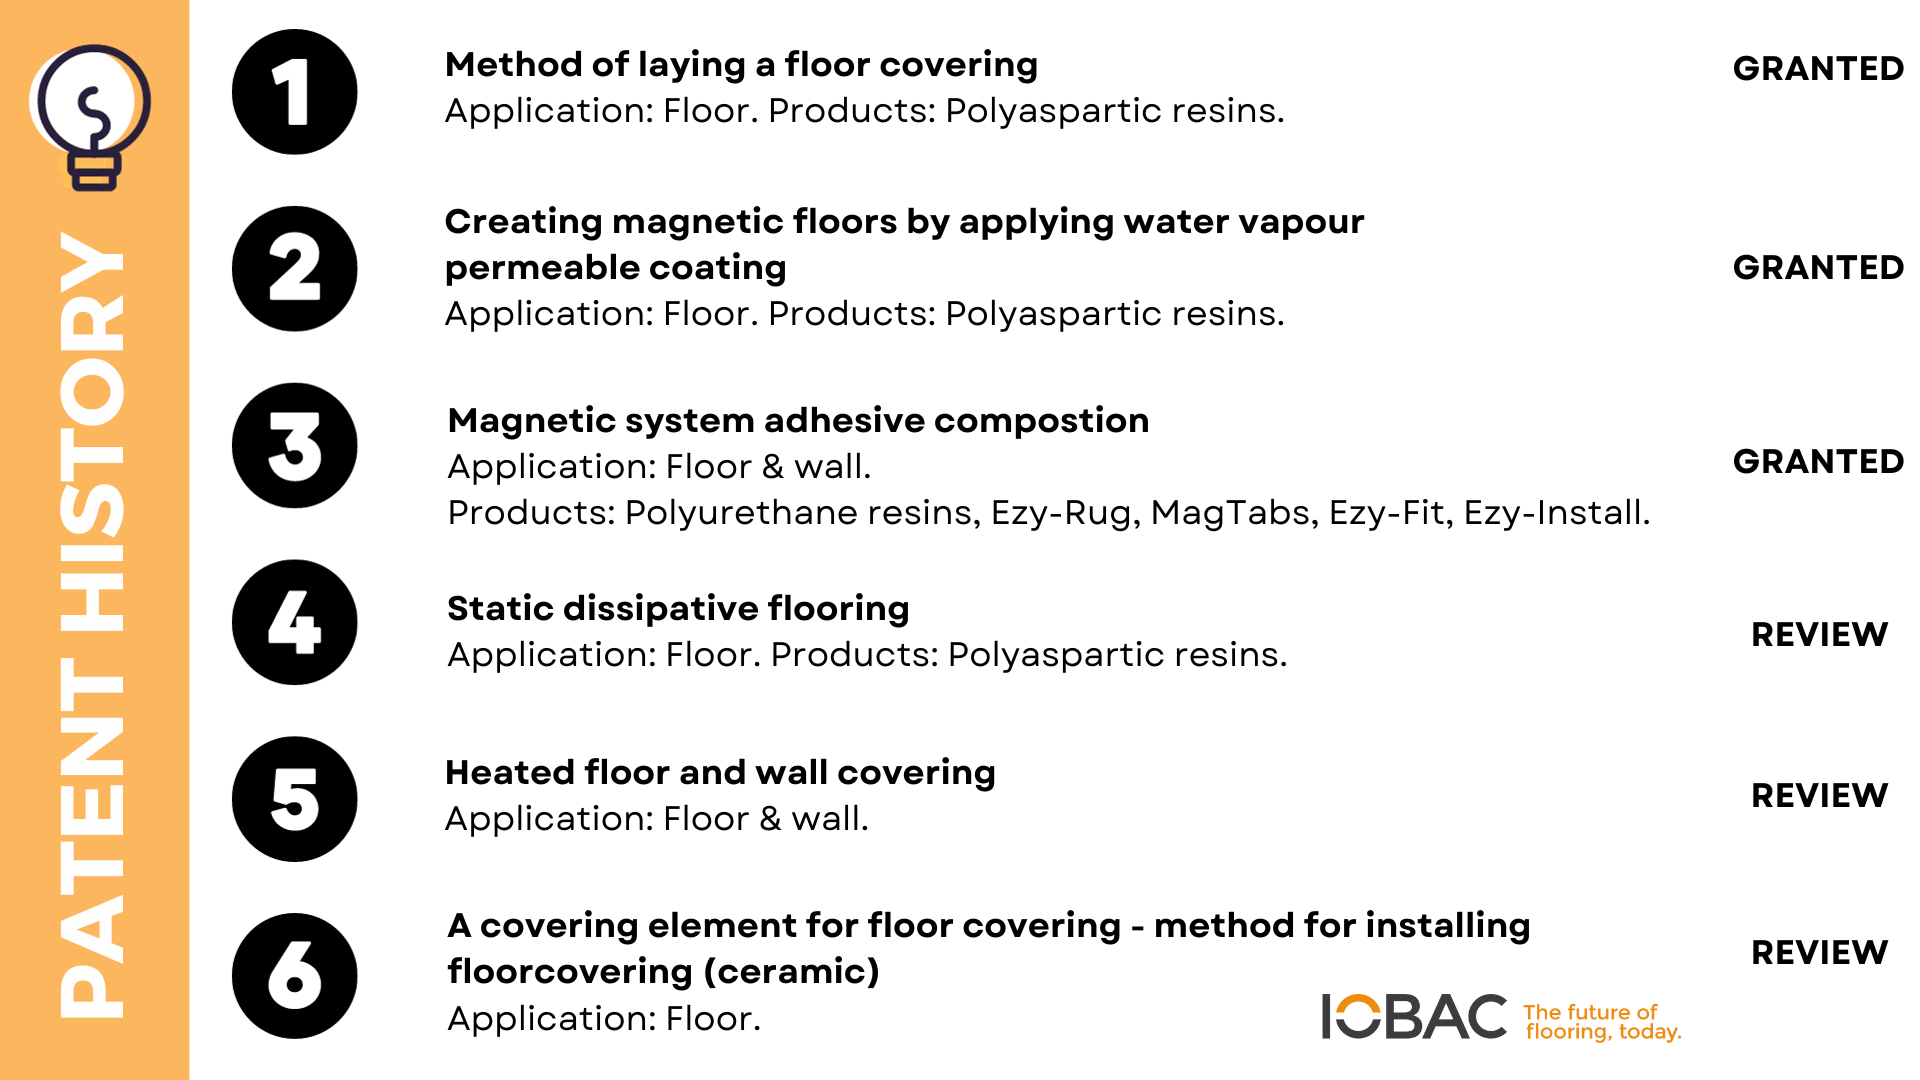 IOBAC Patented Technolgies - Summary Table